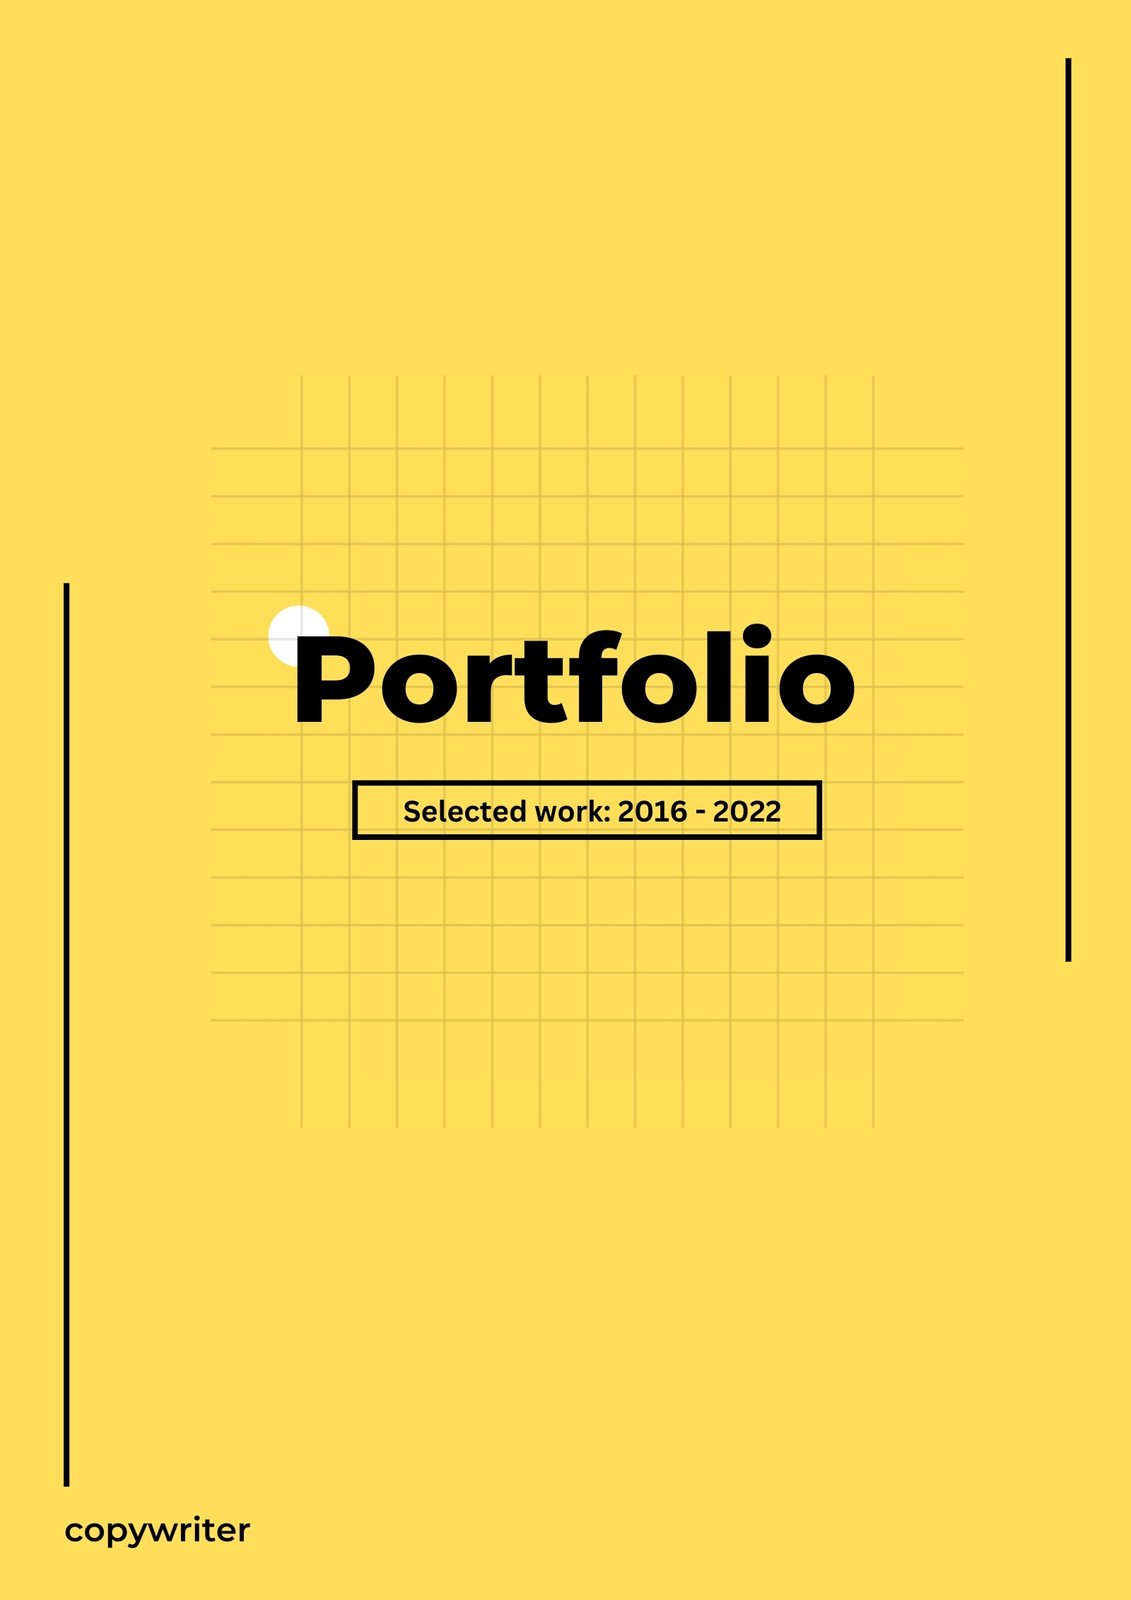 Graphic Design Portfolio Cover Page Examples